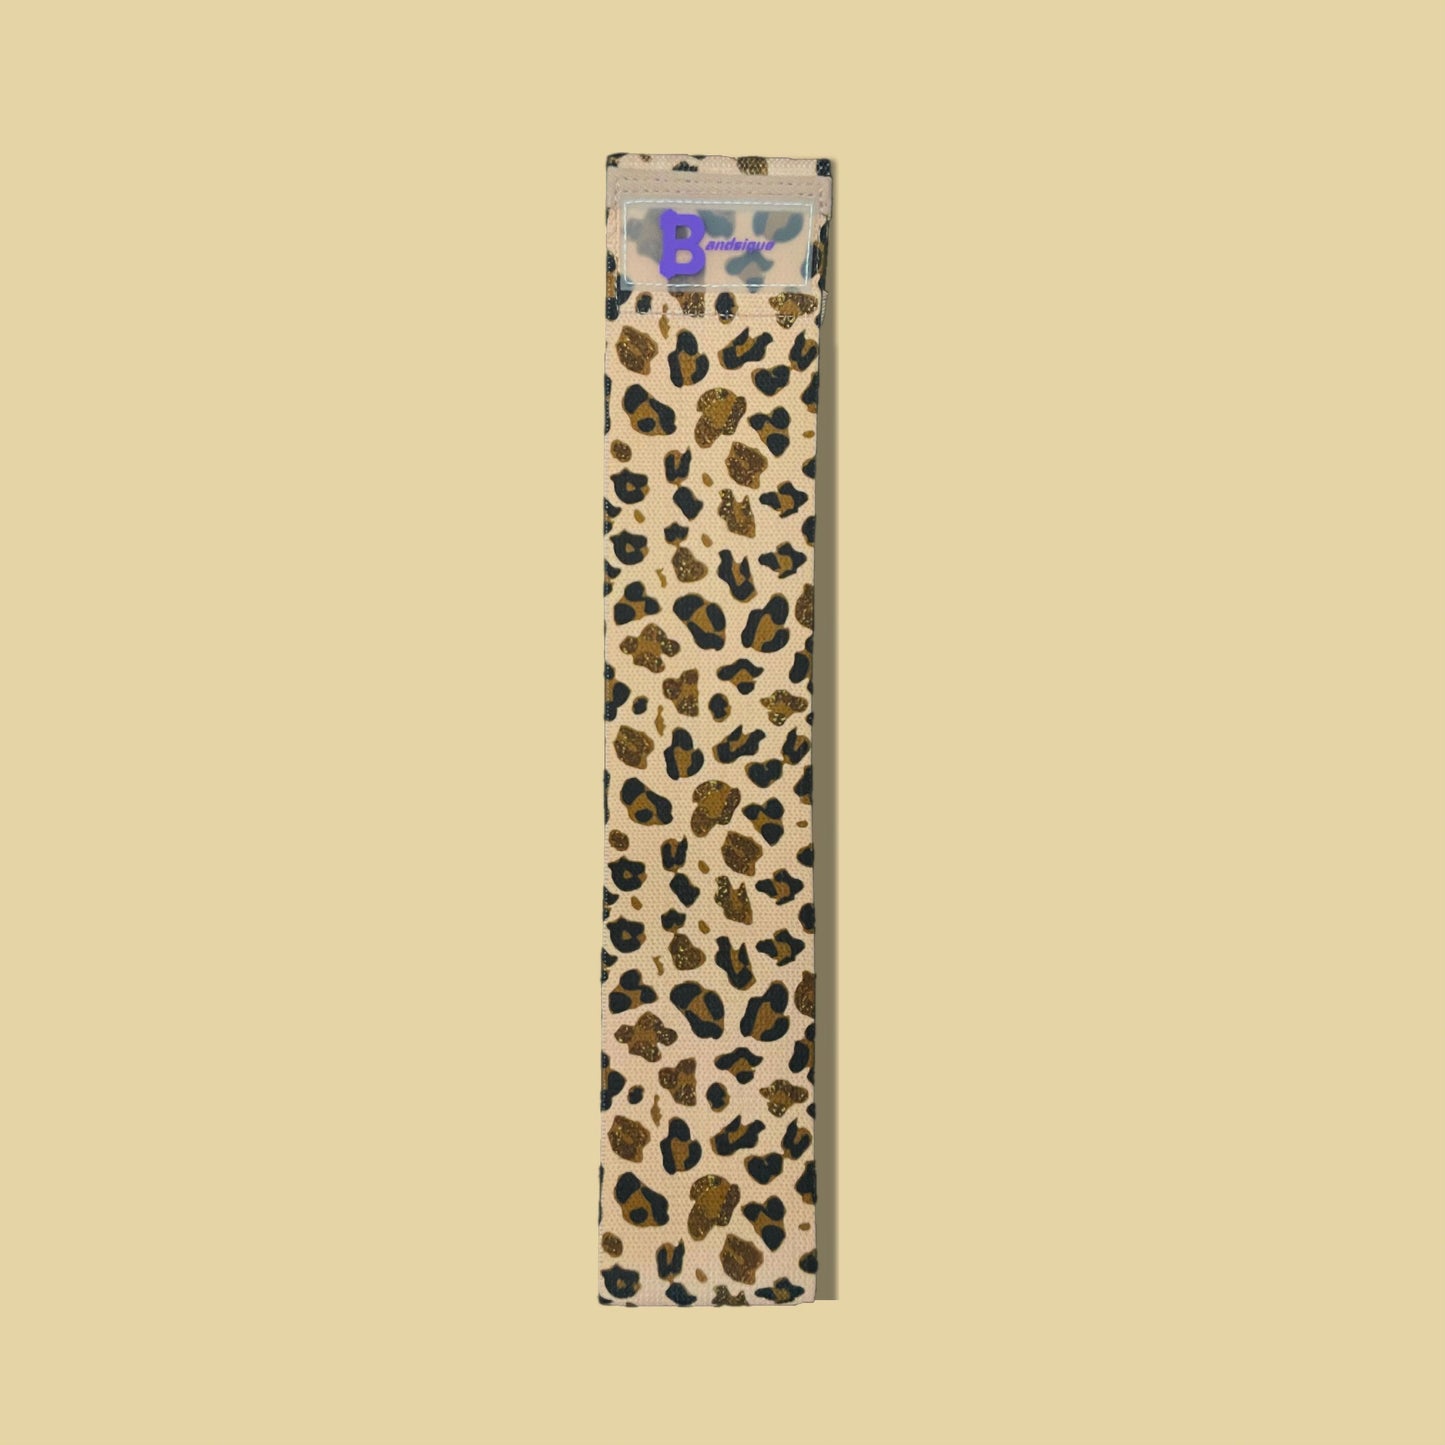 Cheetah print heavy durable resistance band